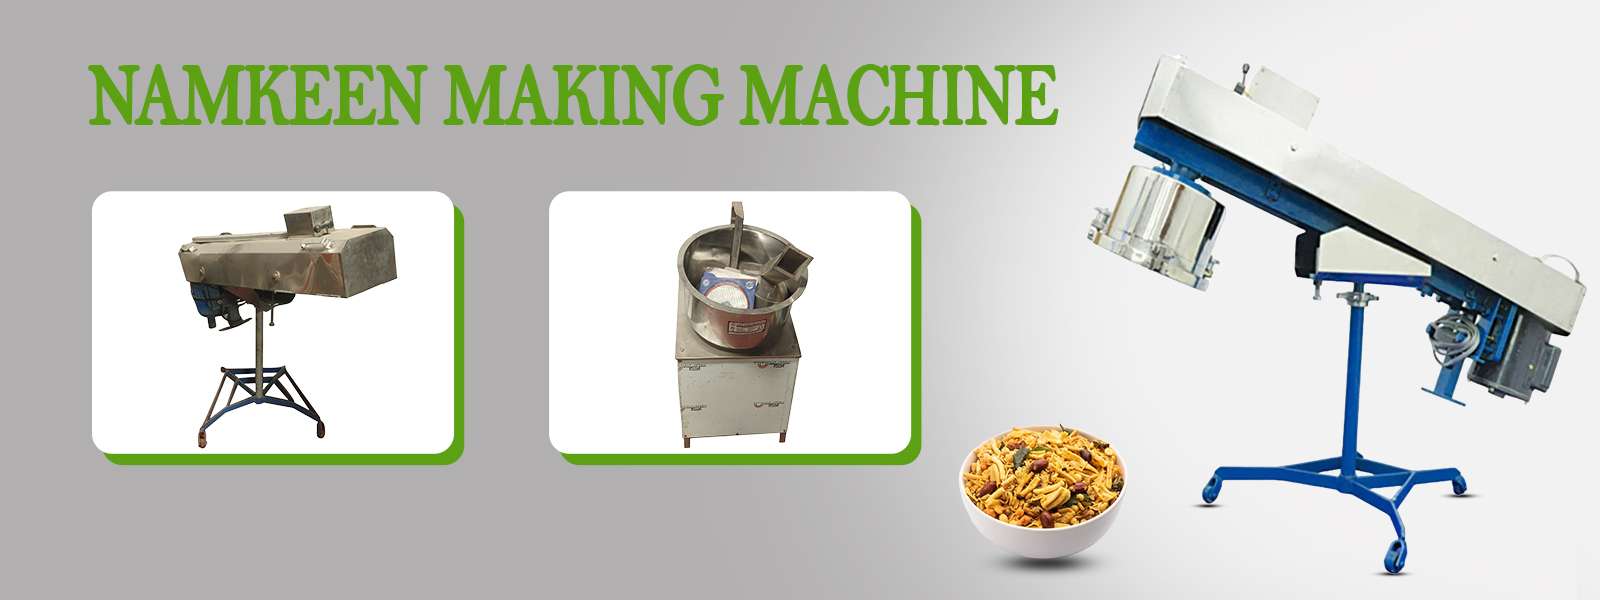 Namkeen Making machine - Foodmart Agro Engineering